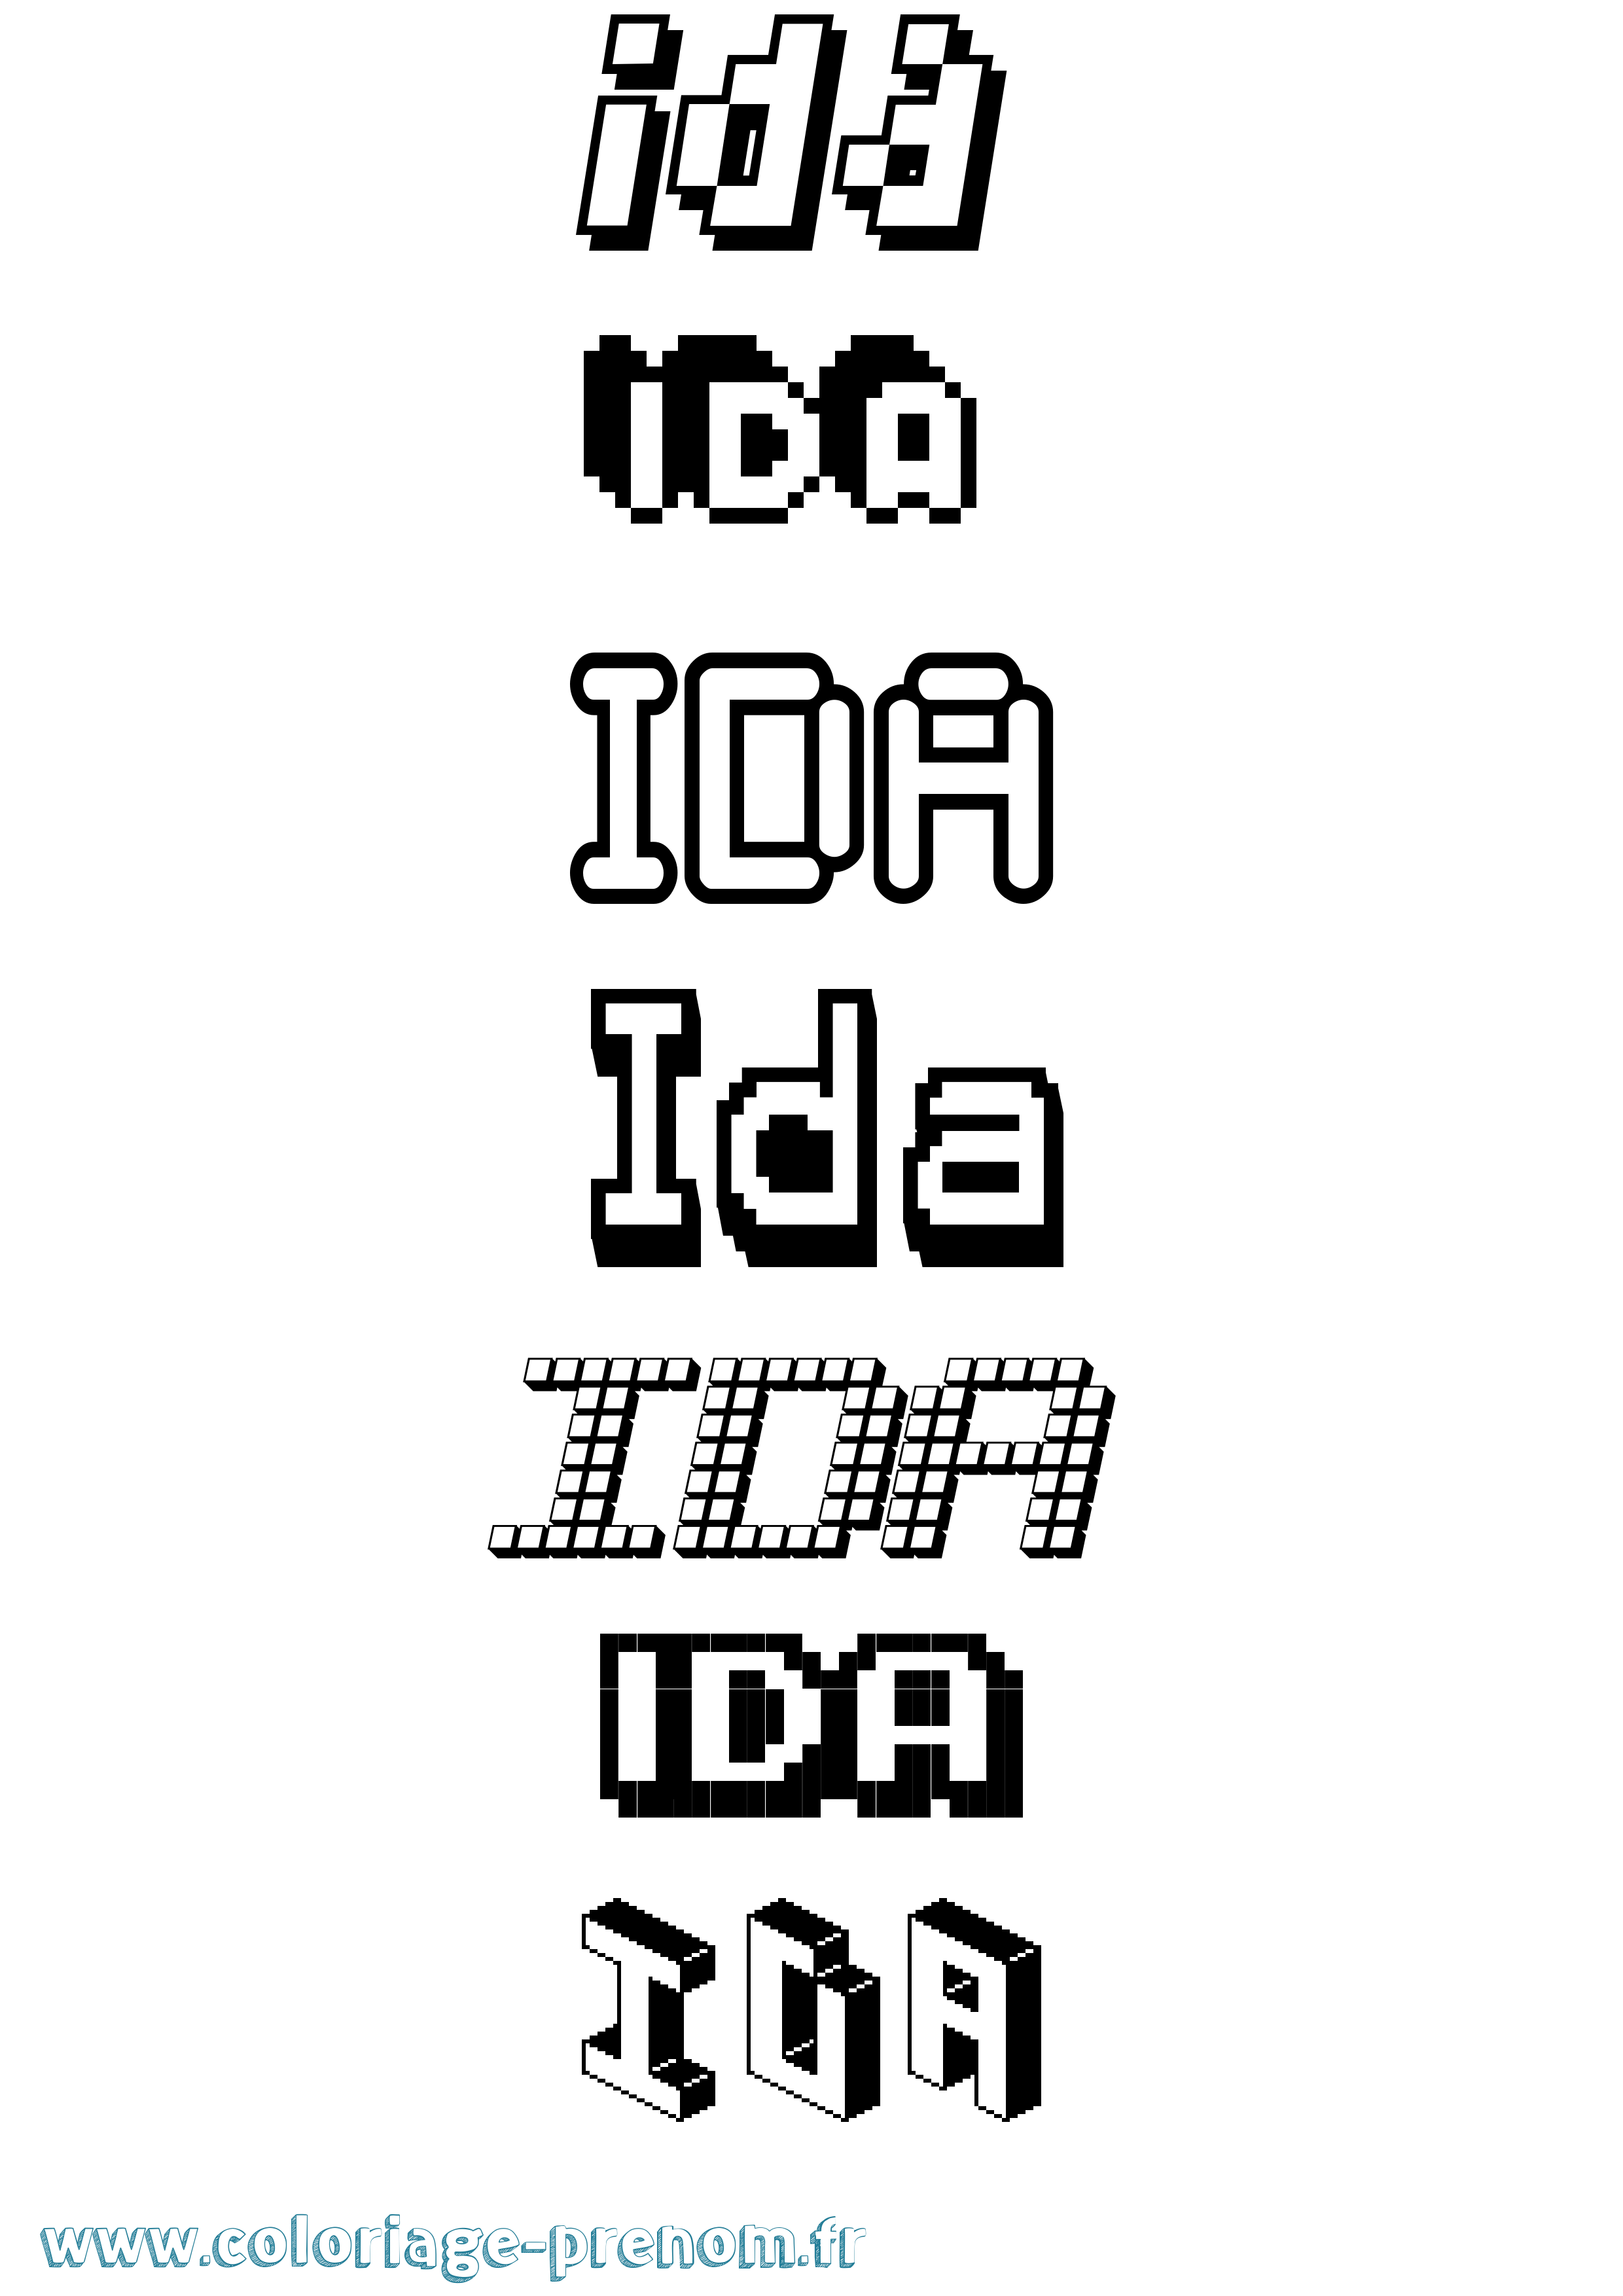 Coloriage prénom Ida Pixel